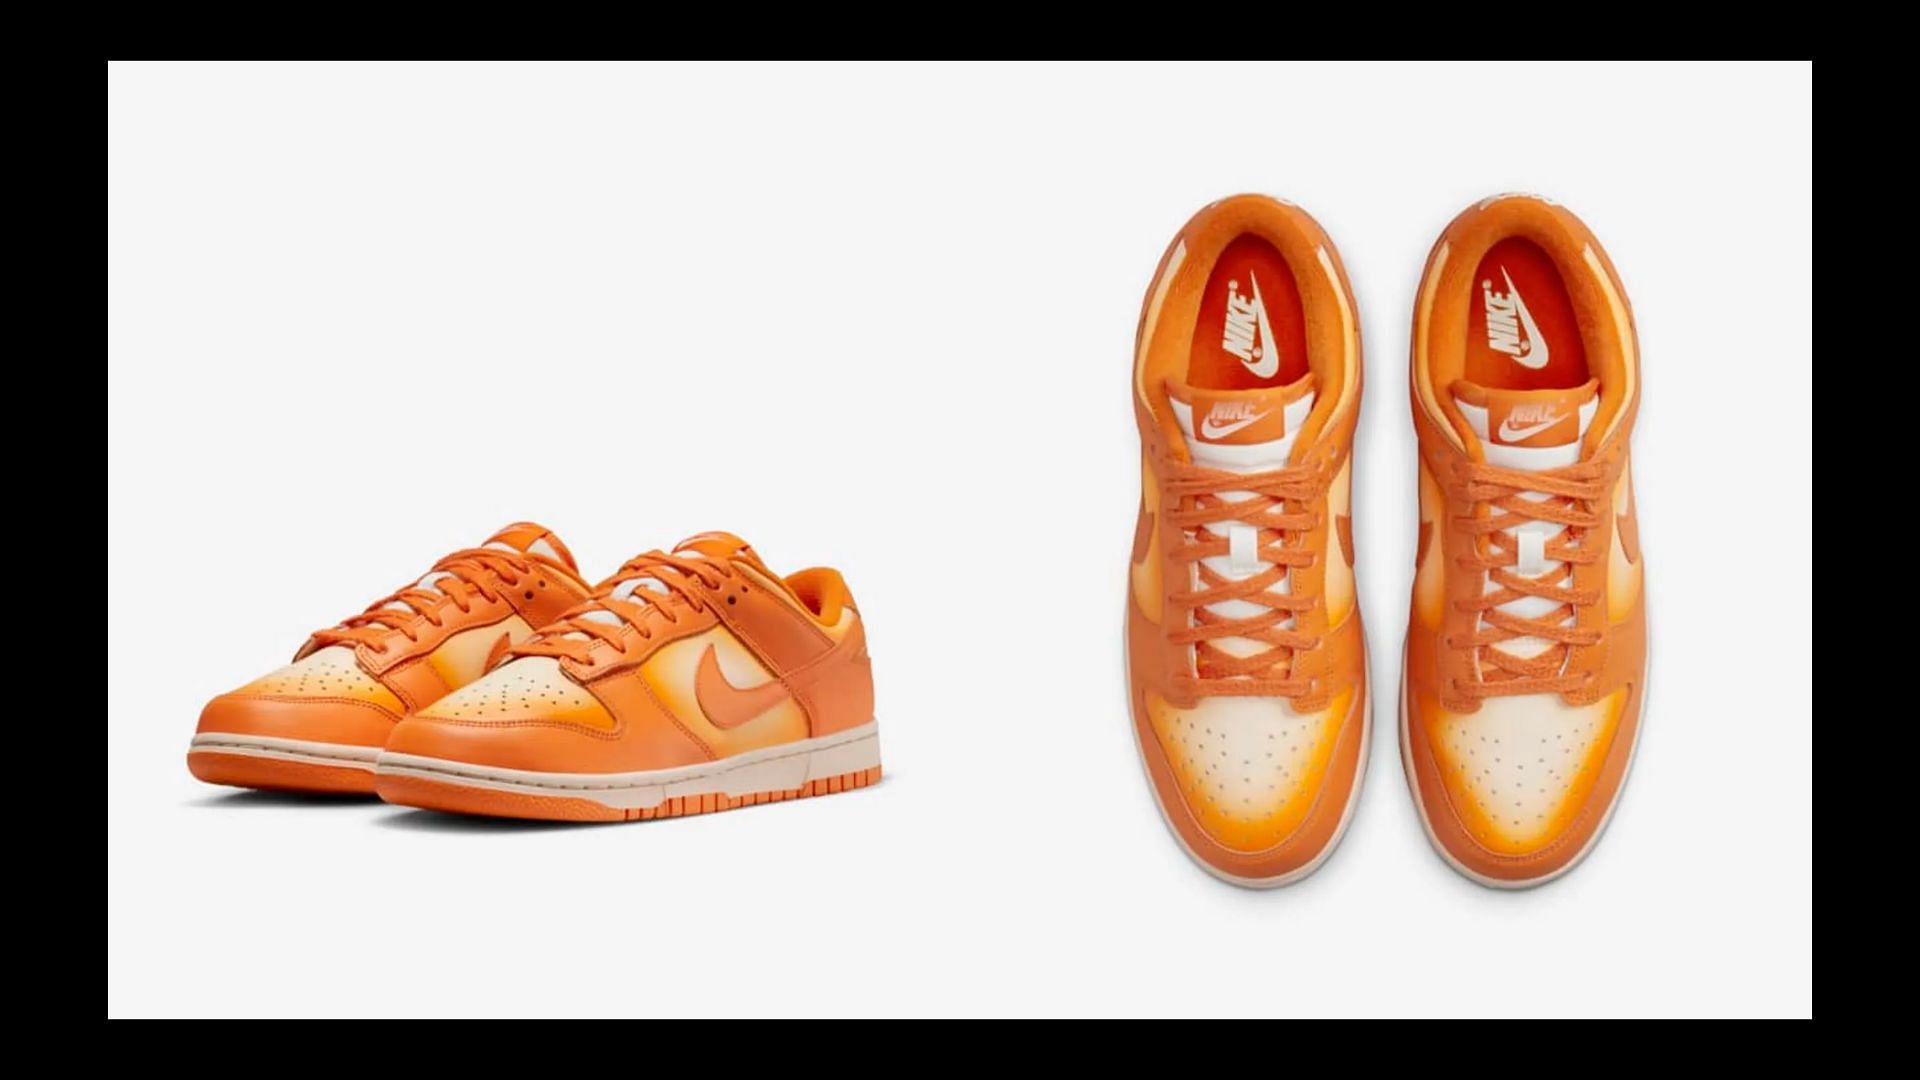 Women's Dunk Low Magma Orange (Image via Nike)